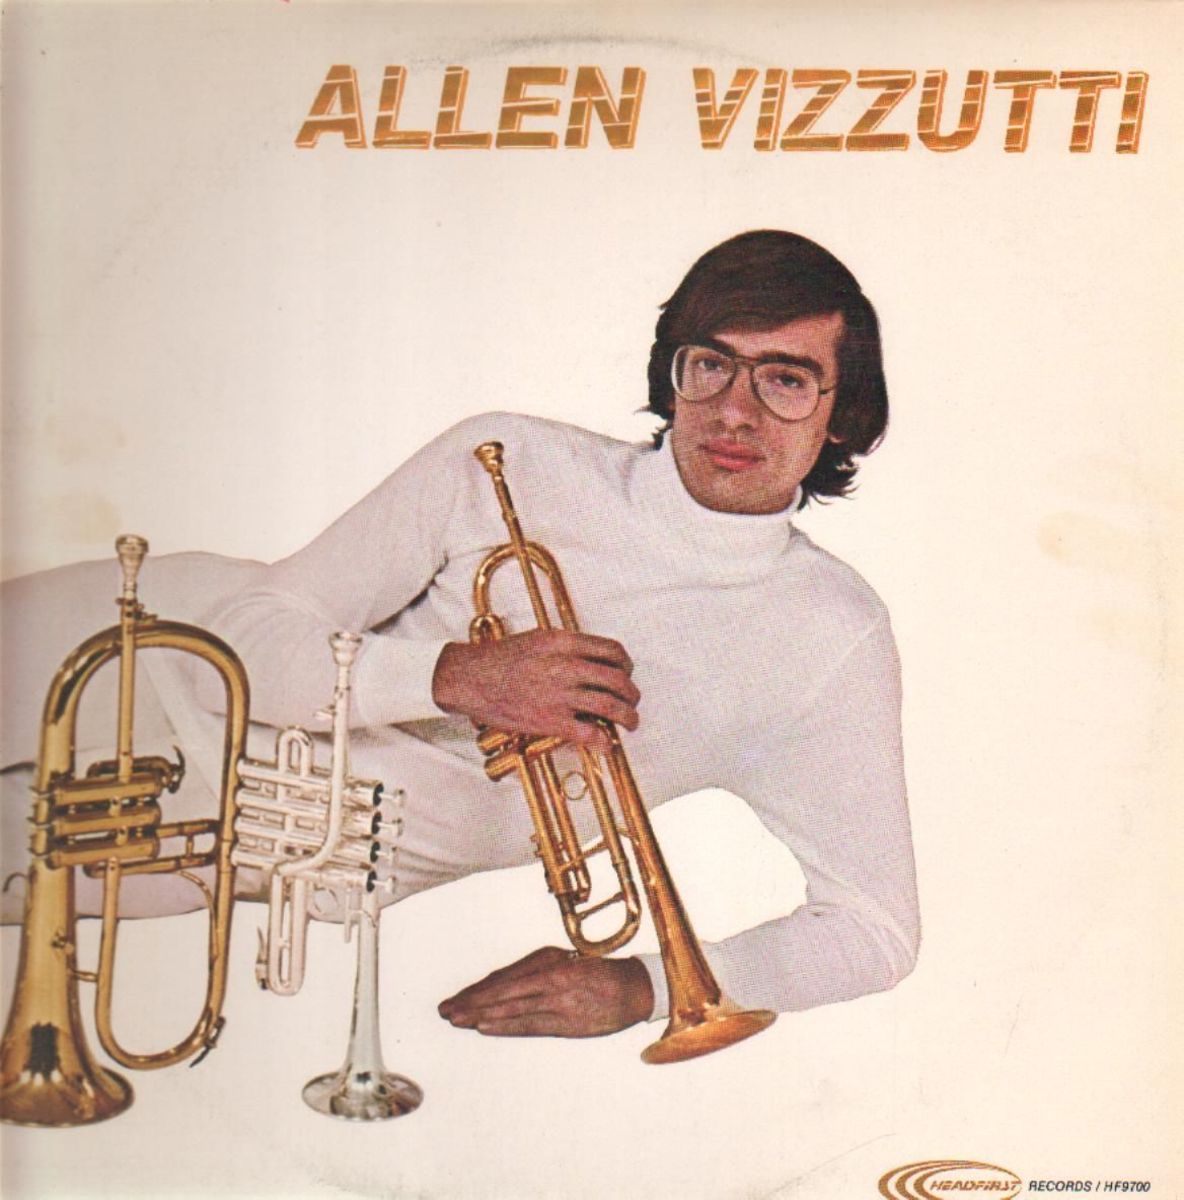 Allen Vizzutti 'Allen Vizzutti' LP/1981/Jazz Funk/USA/Nmint